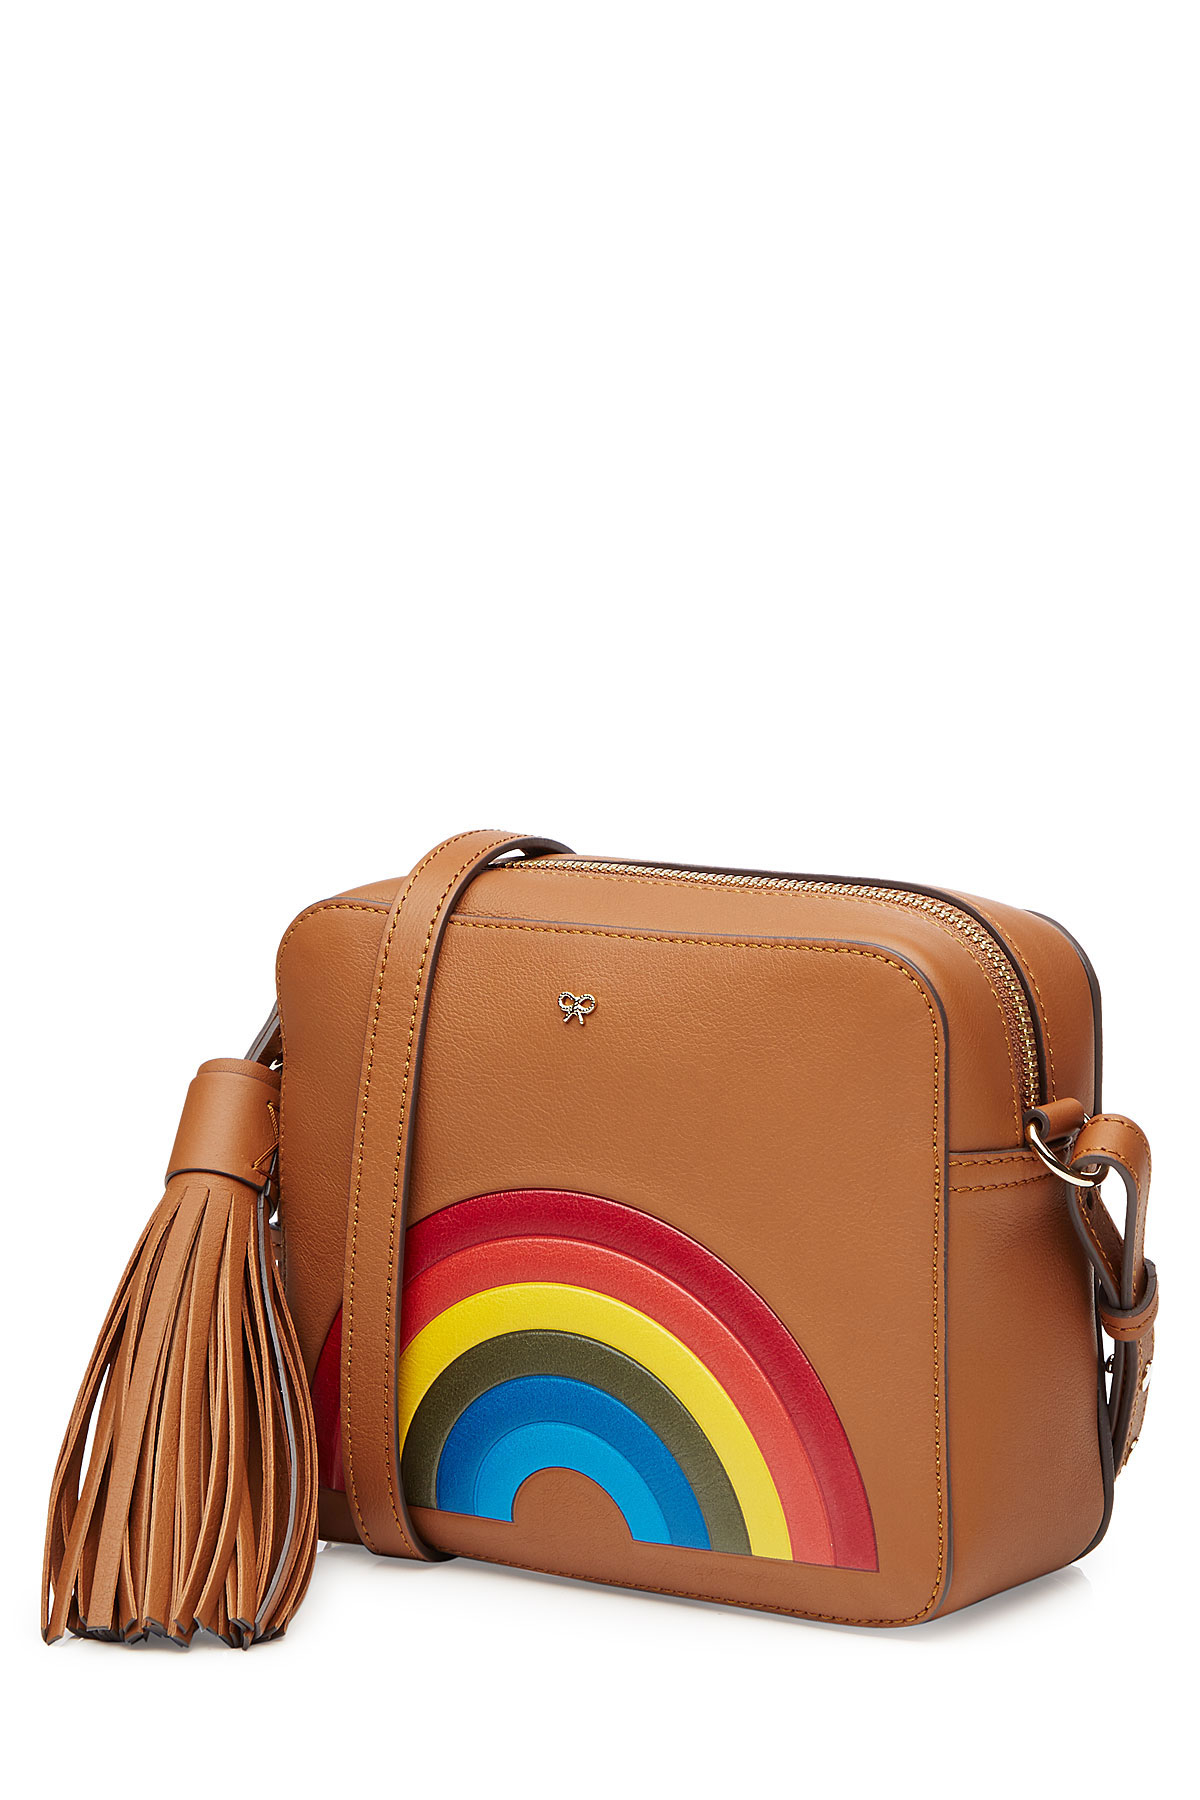 Lyst - Anya Hindmarch Rainbow Cross Body Bag in Brown